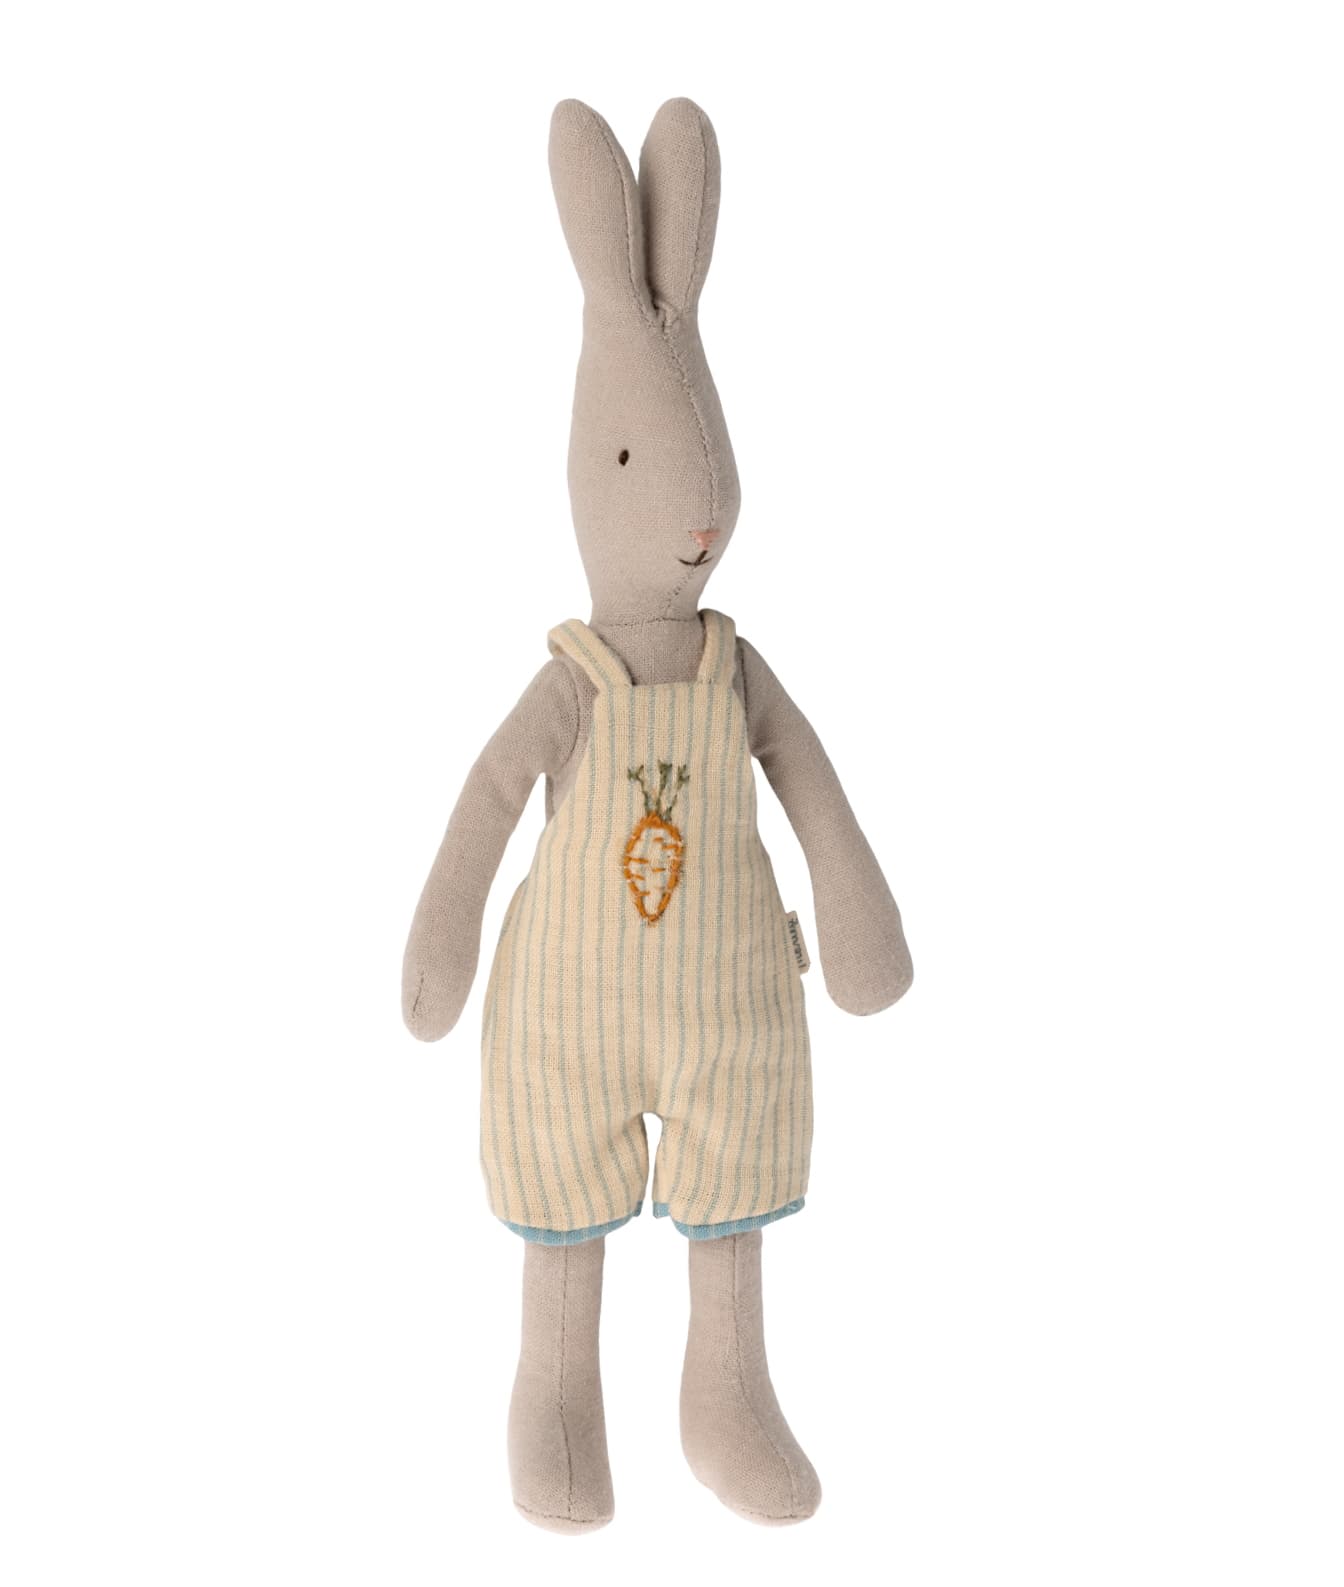 Maileg Rabbit Size 1 - wearing overalls